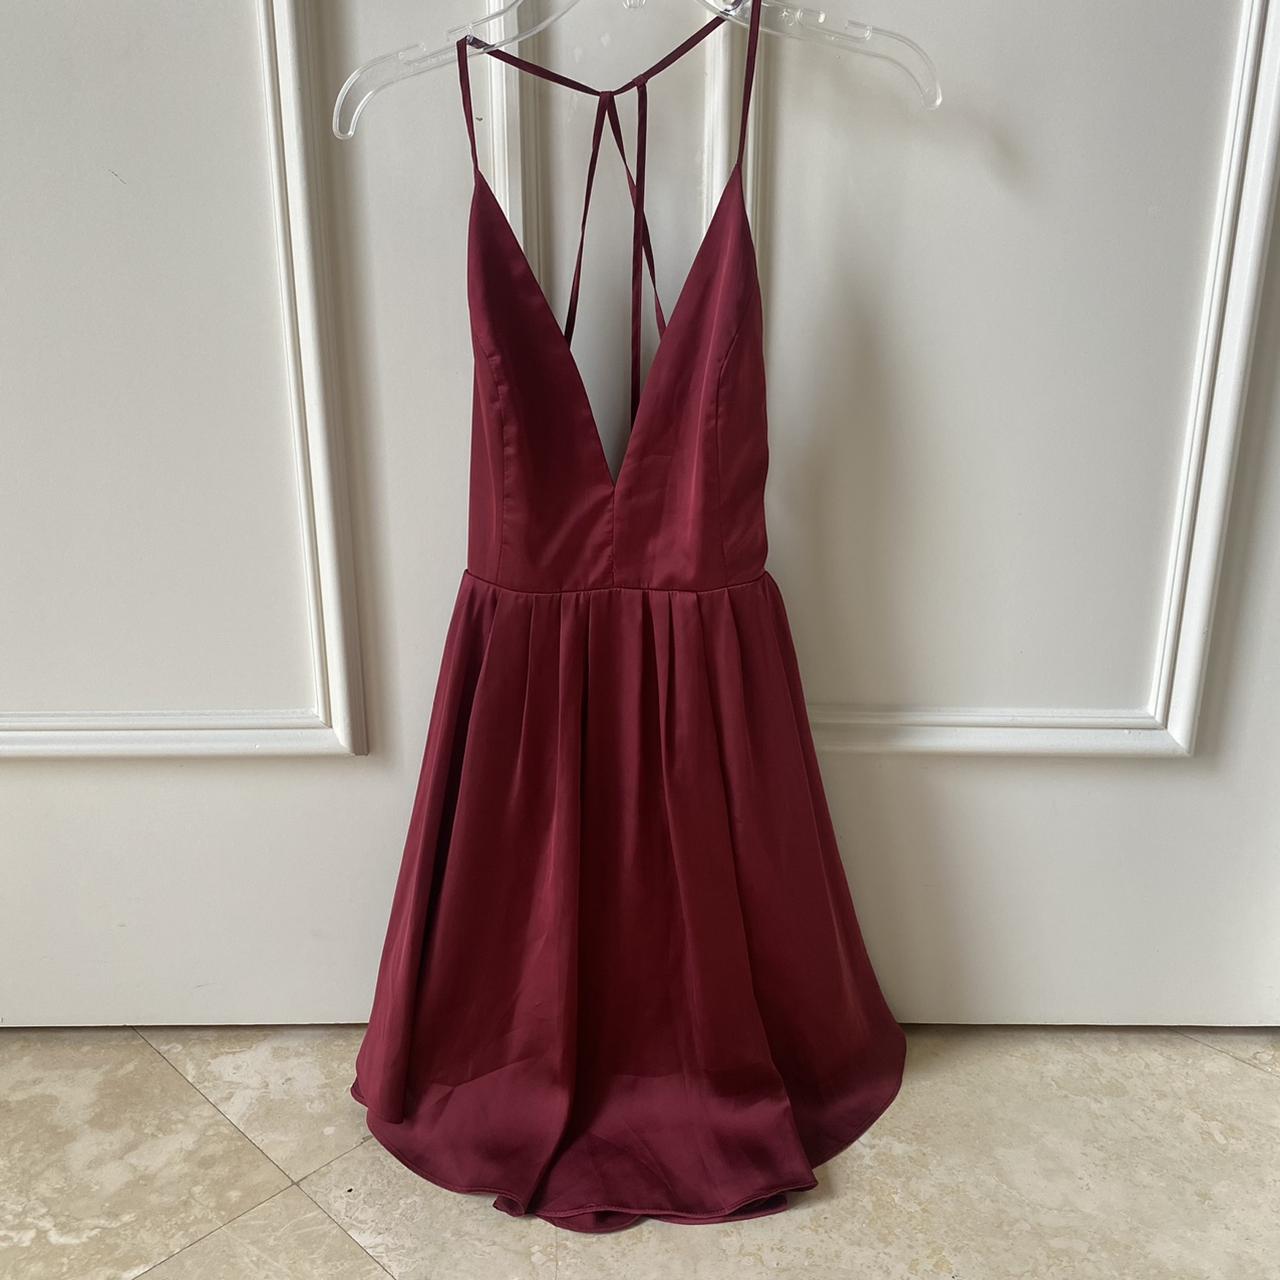 LNA Women's Red and Burgundy Dress